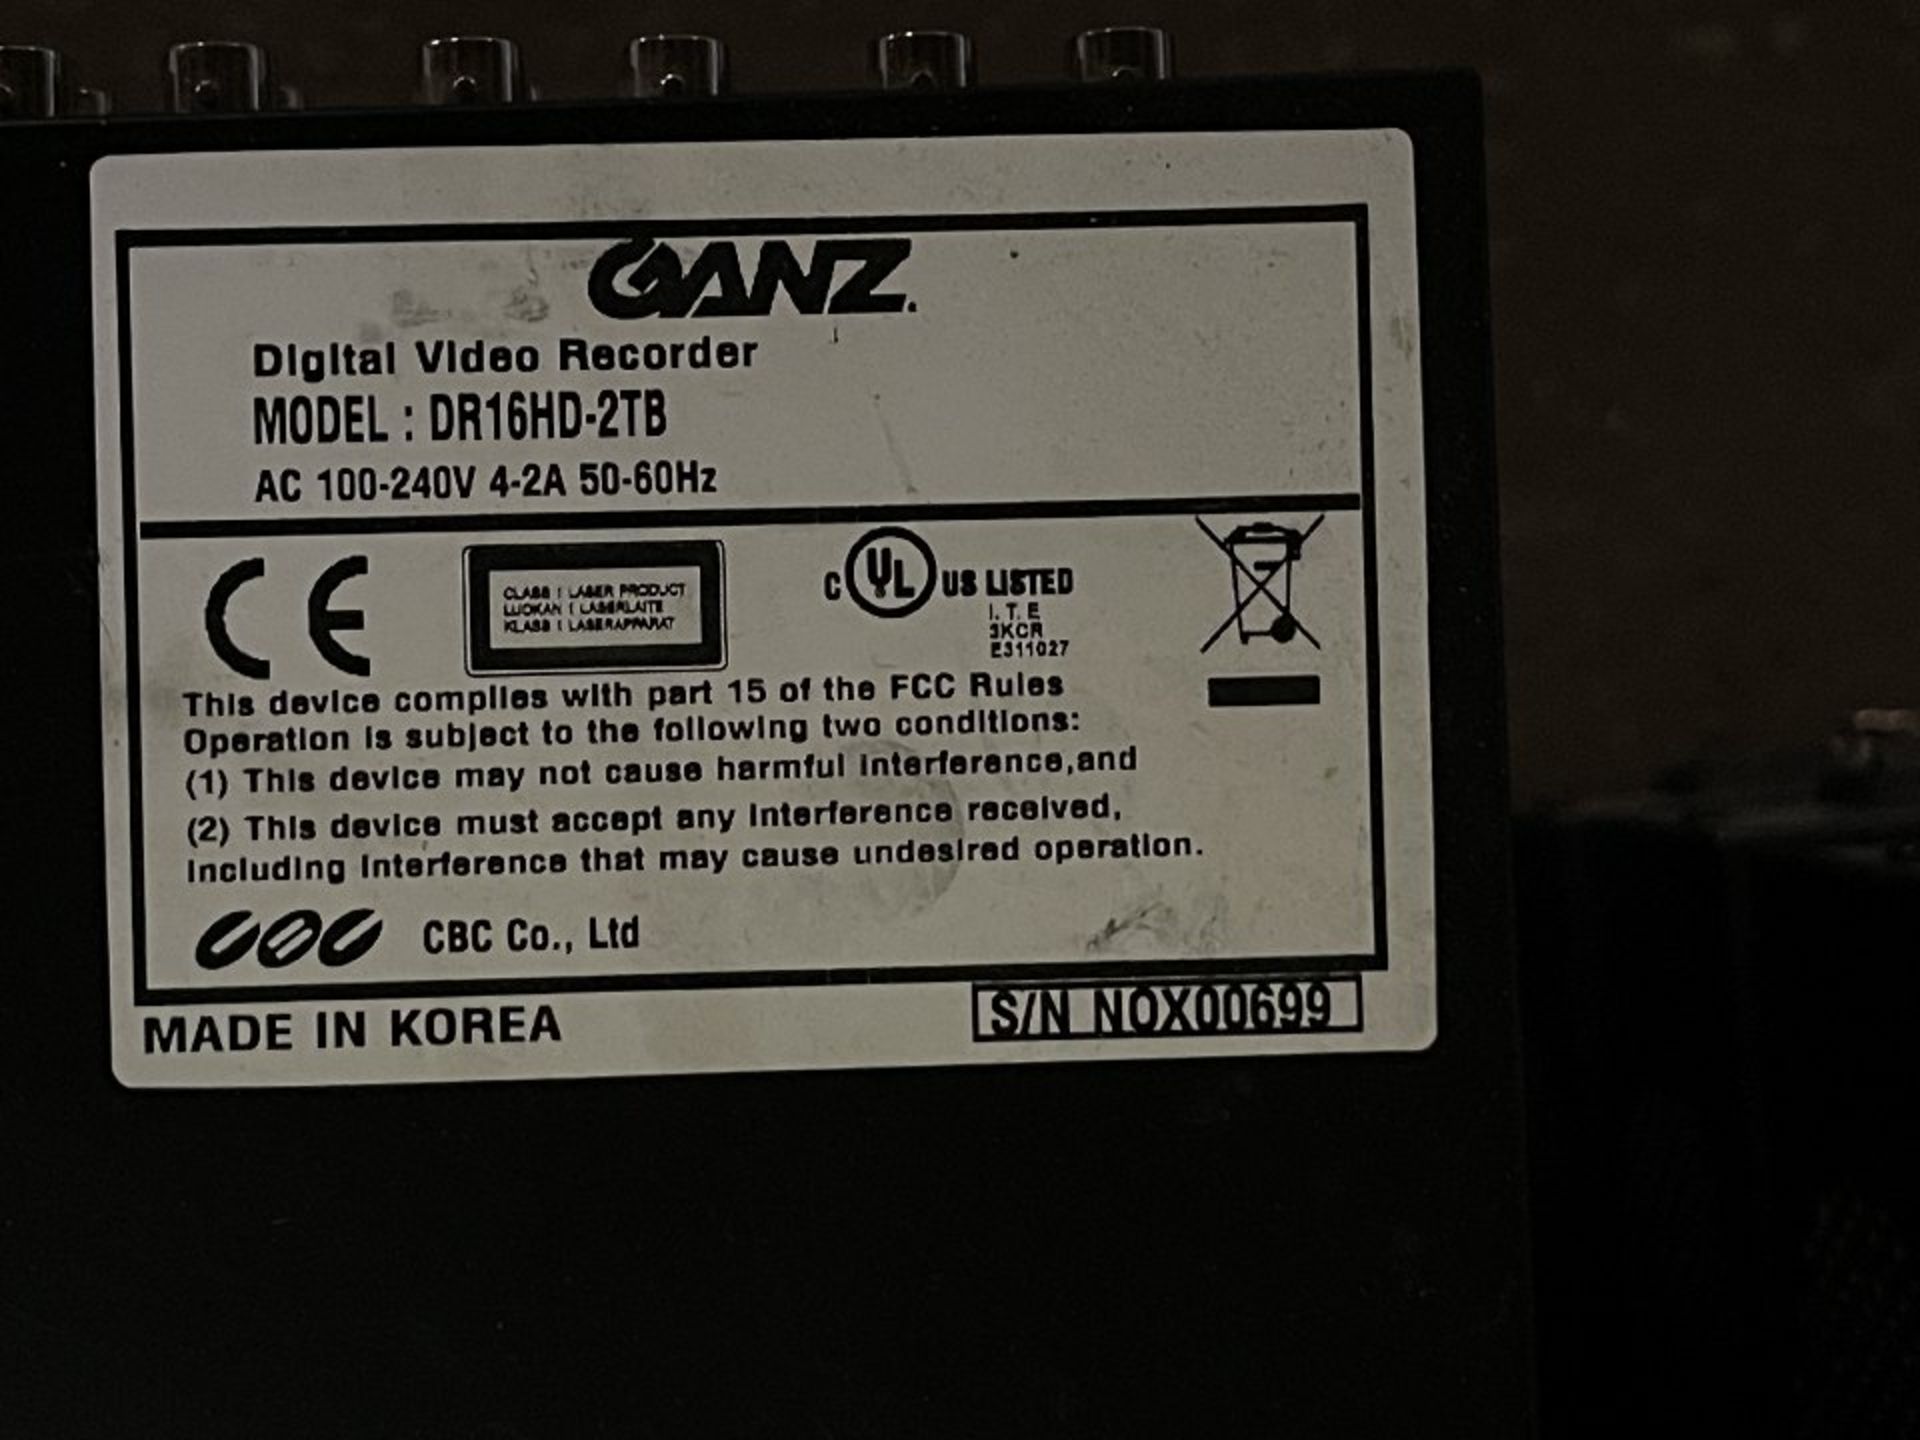 Ganz Digital Video Recorders - Image 2 of 2